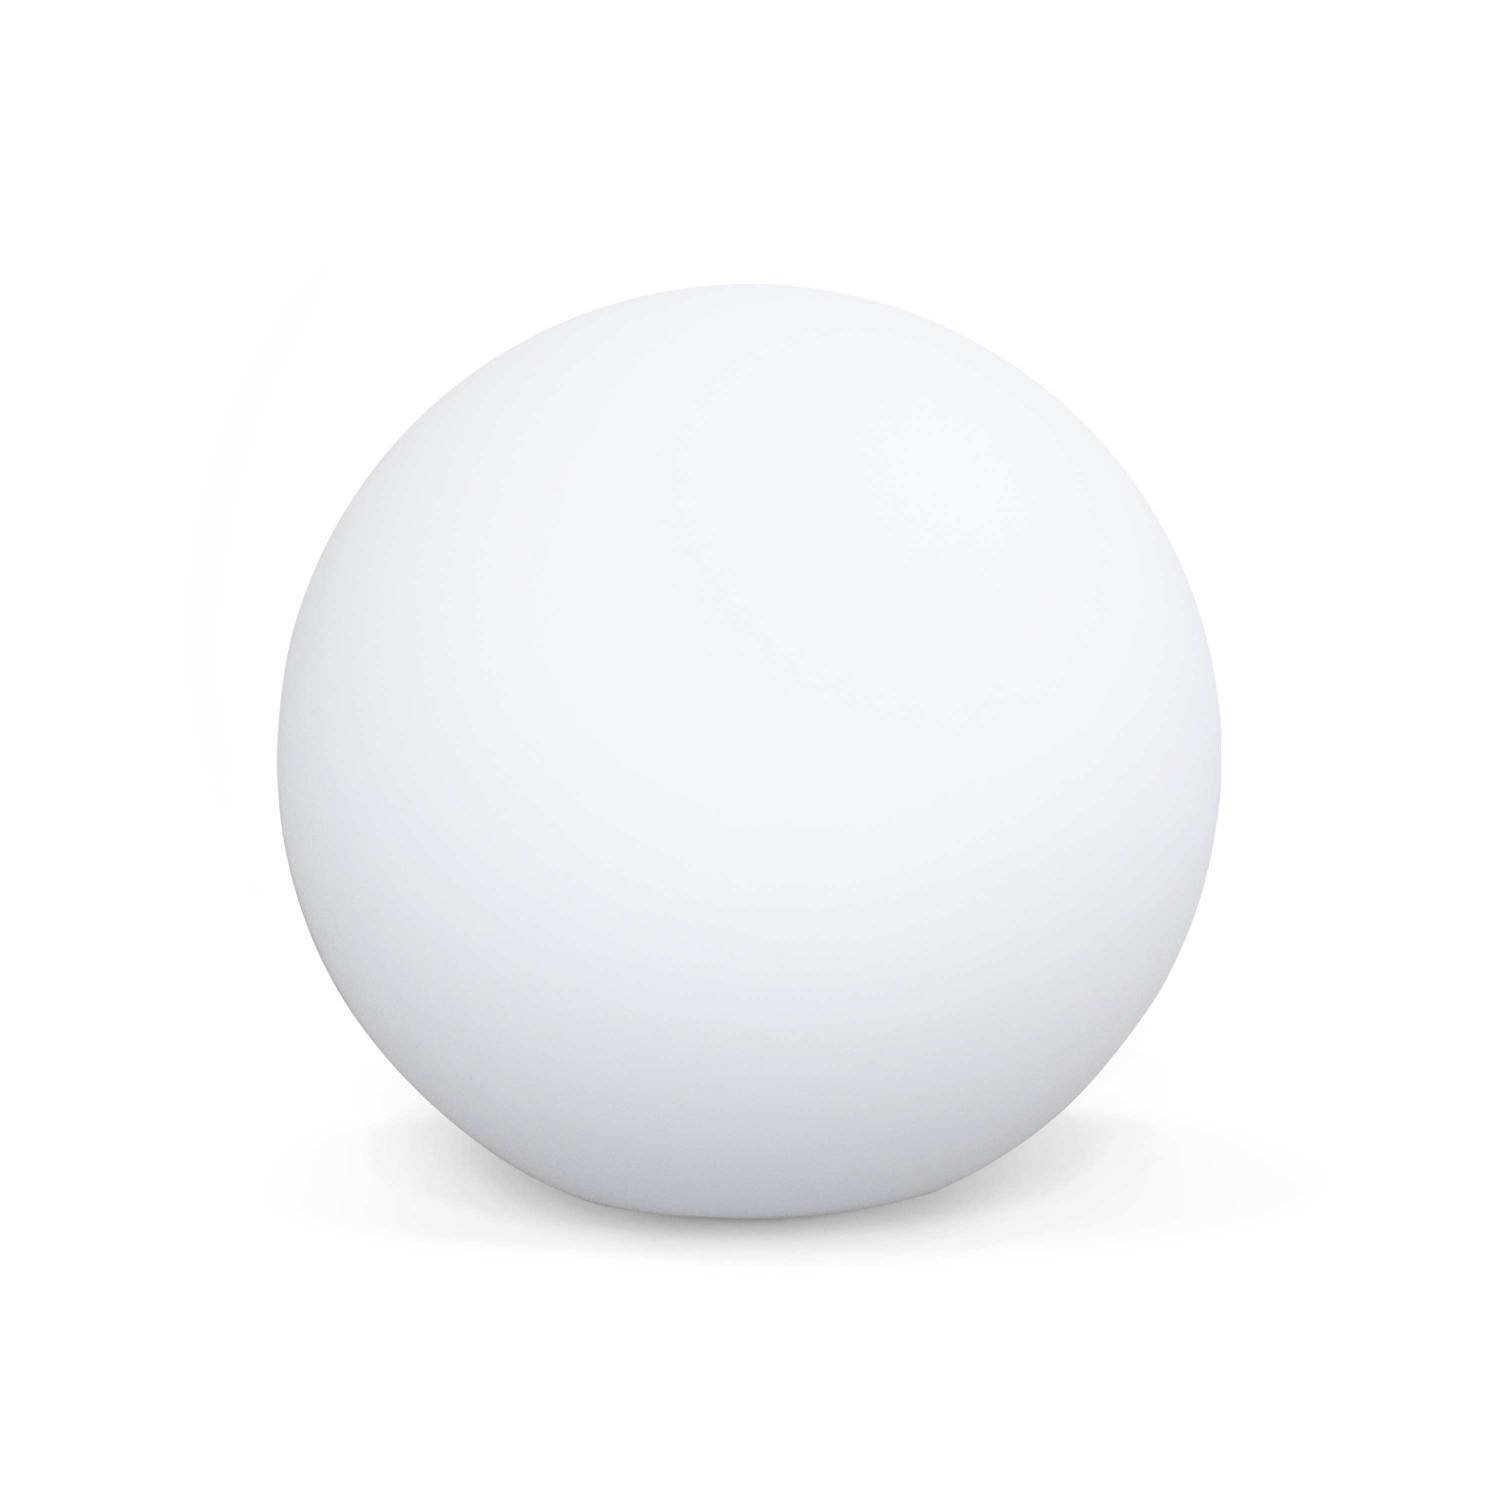 50cm spherical LED lamp – Decorative light sphere, remote control, Warm white Photo1